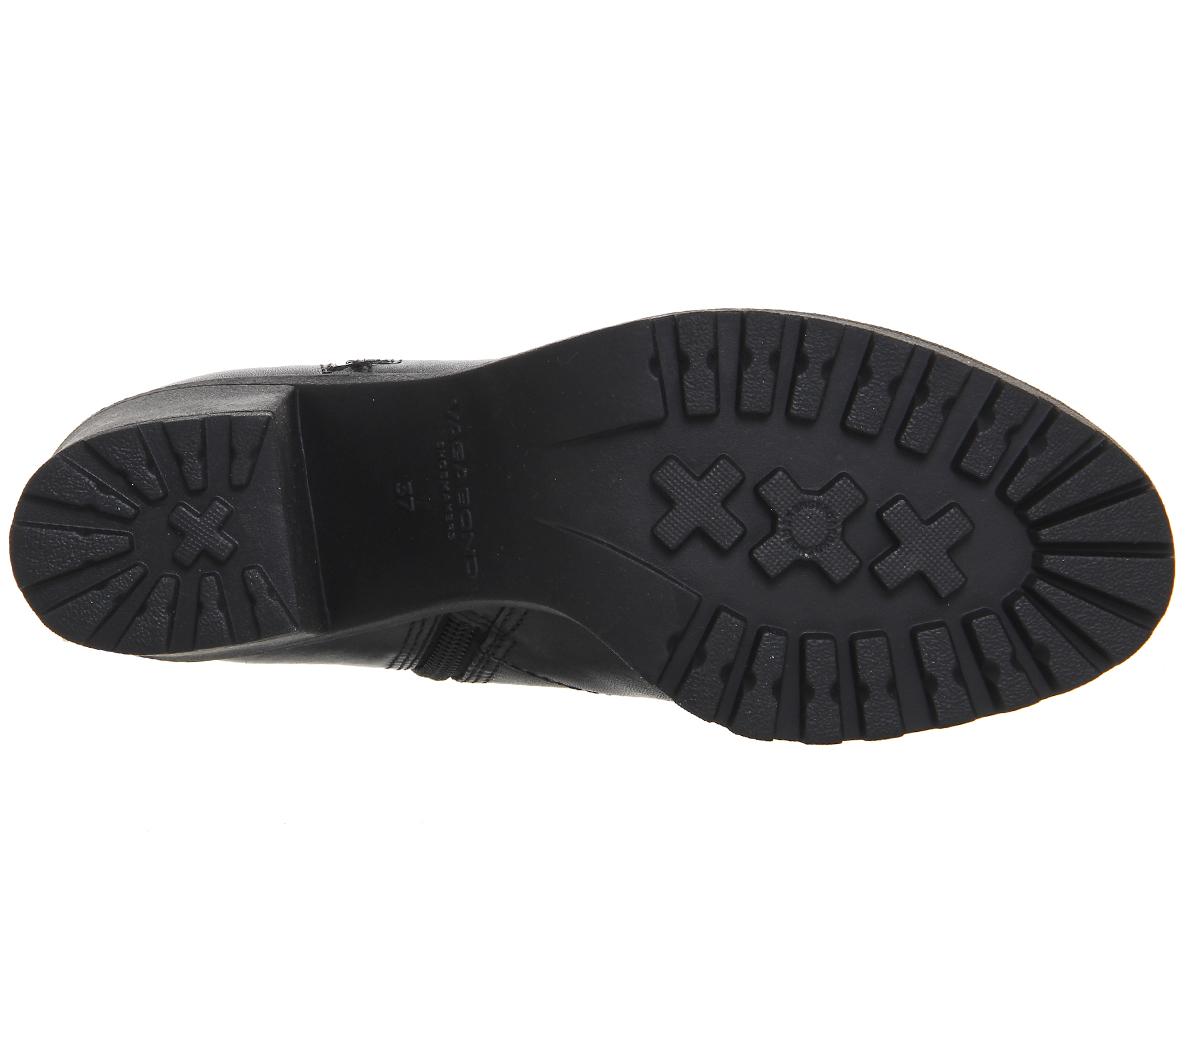 Vagabond Shoemakers Grace Side Zip Boots Black Leather - Women's Ankle ...